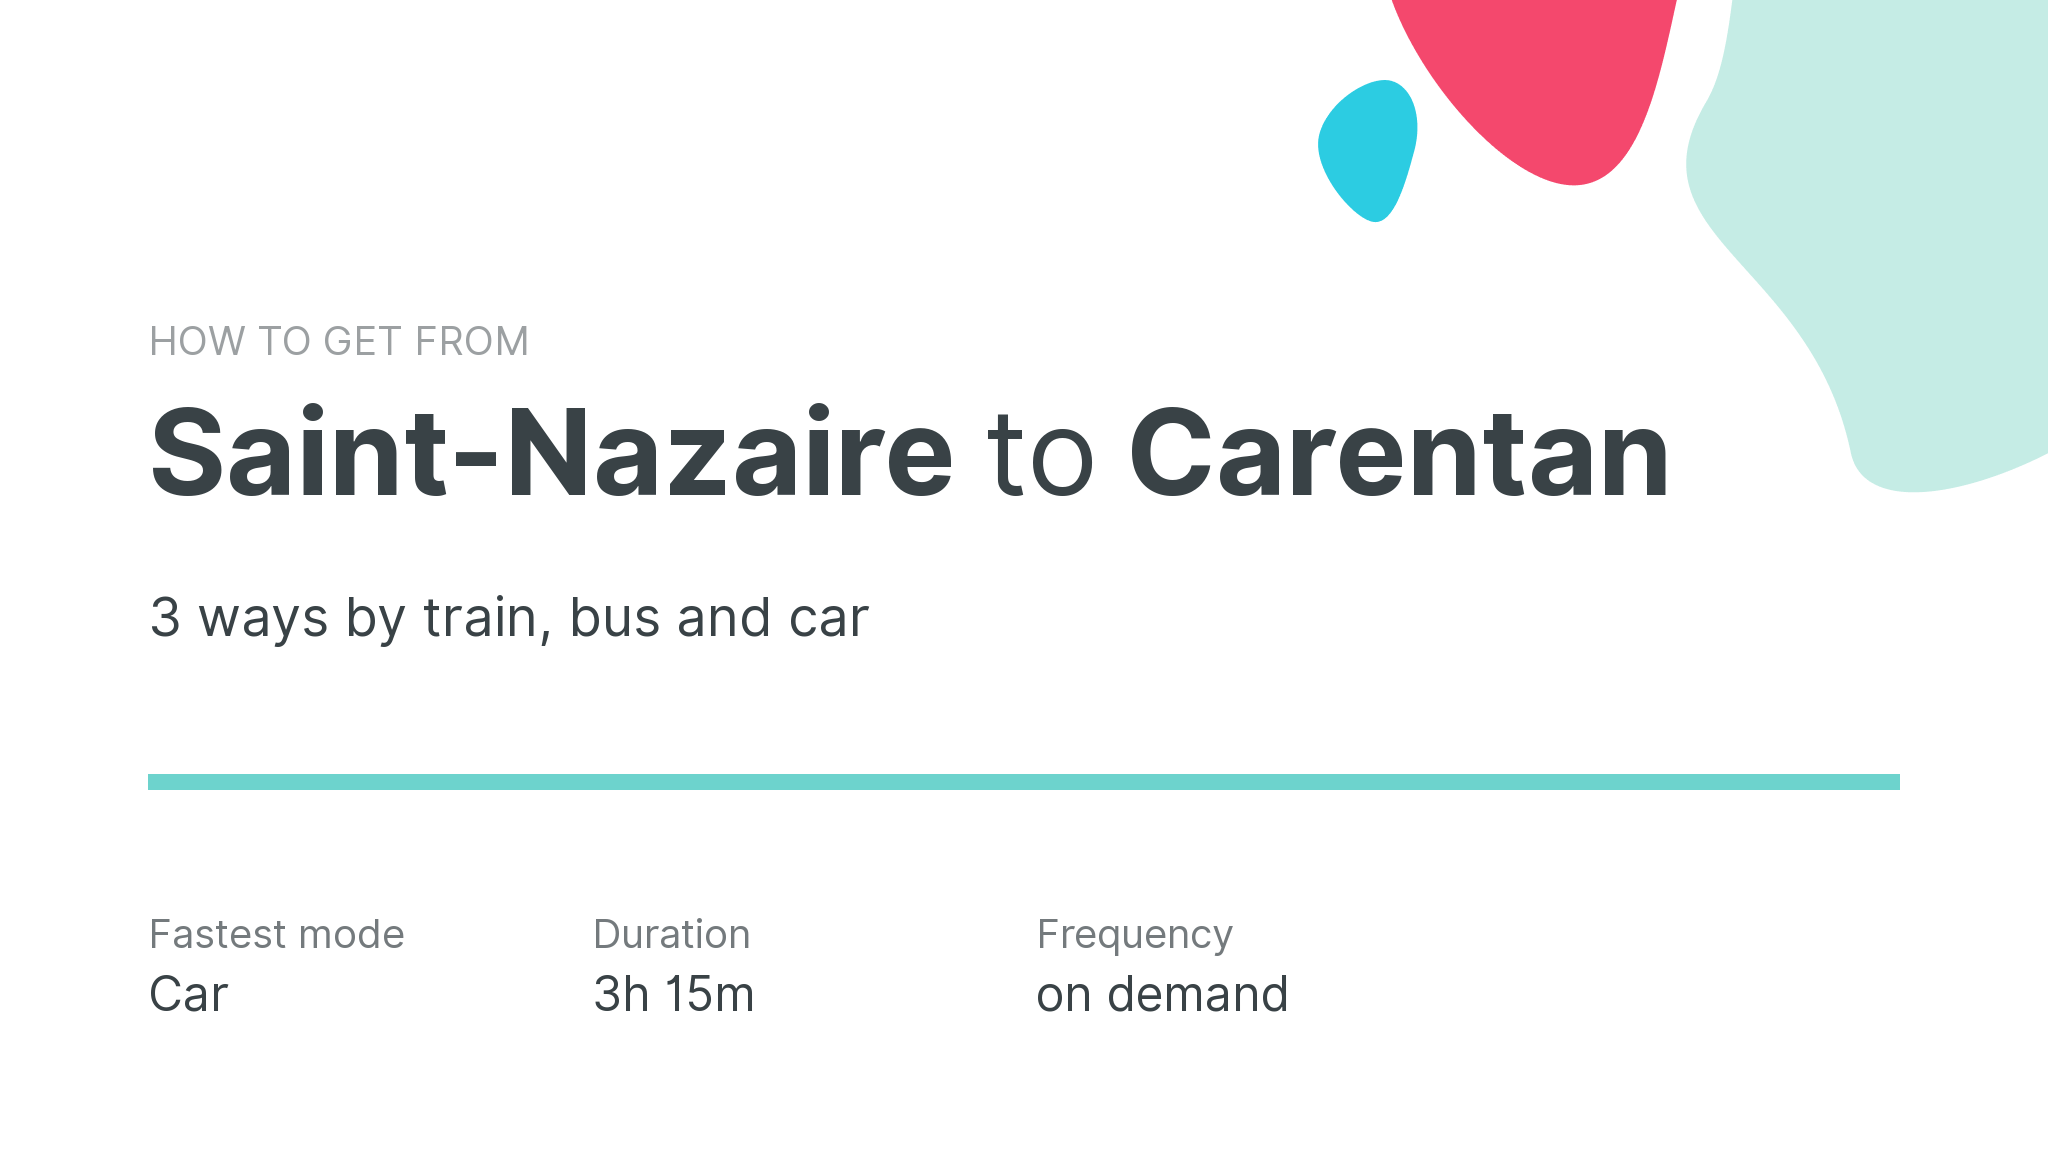 How do I get from Saint-Nazaire to Carentan